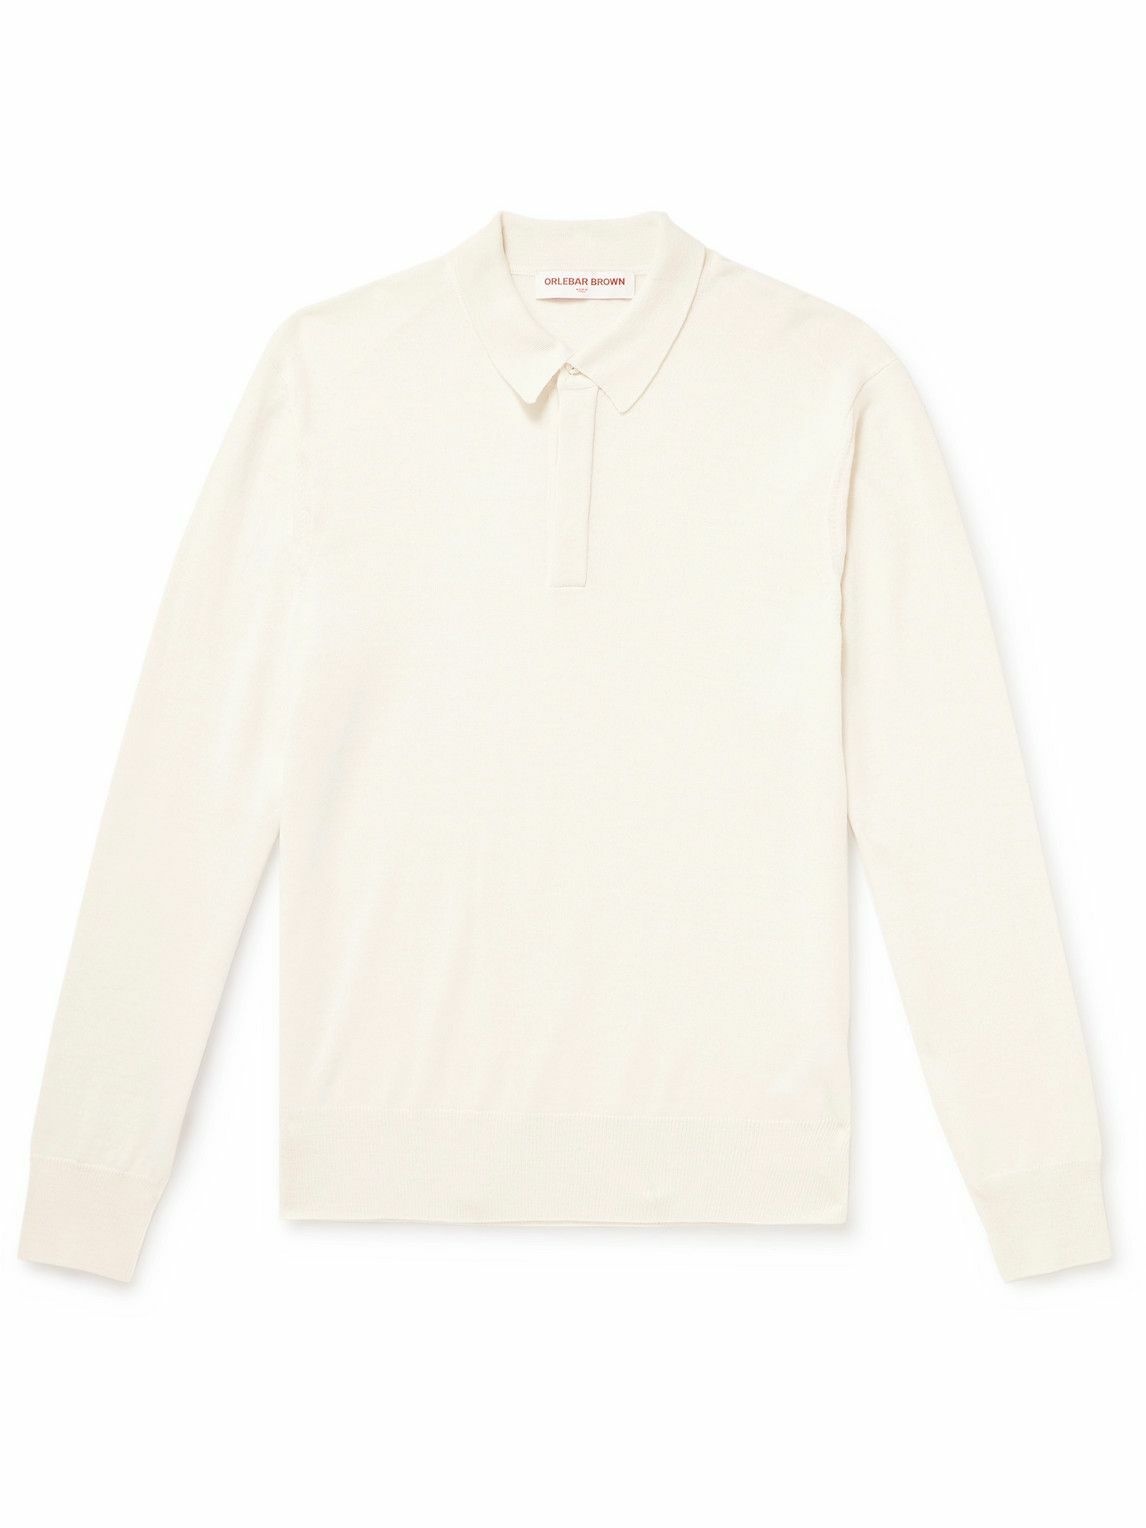 Orlebar Brown - Ebro Striped Merino Wool Polo Shirt - White Orlebar Brown